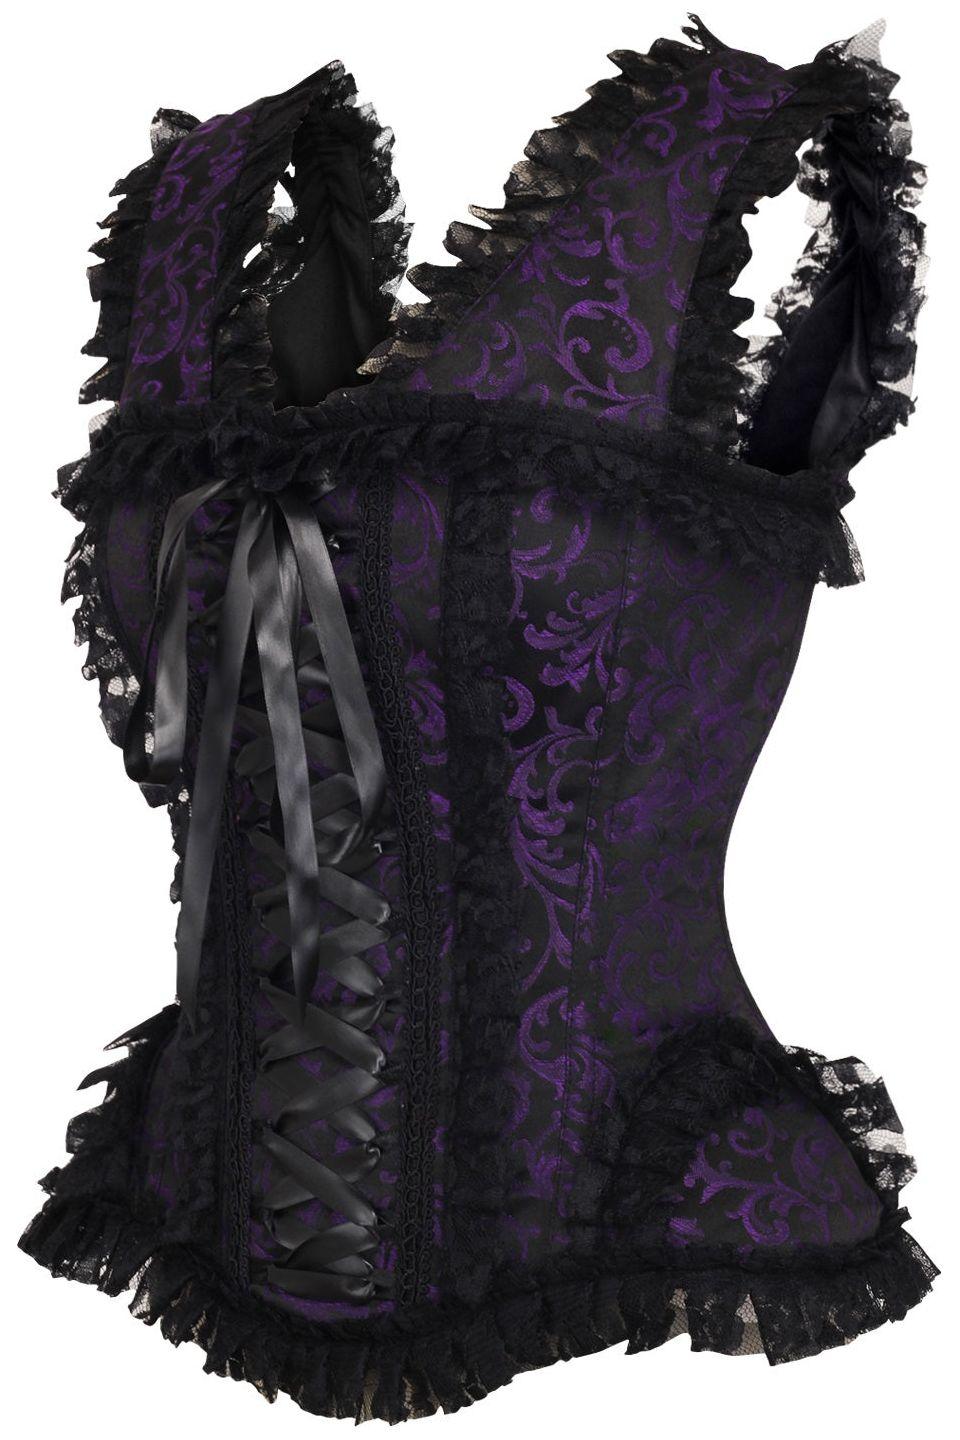 Top Drawer Purple/Black Swirl Brocade & Lace Steel Boned Corset w/Cap Sleeves - AMIClubwear